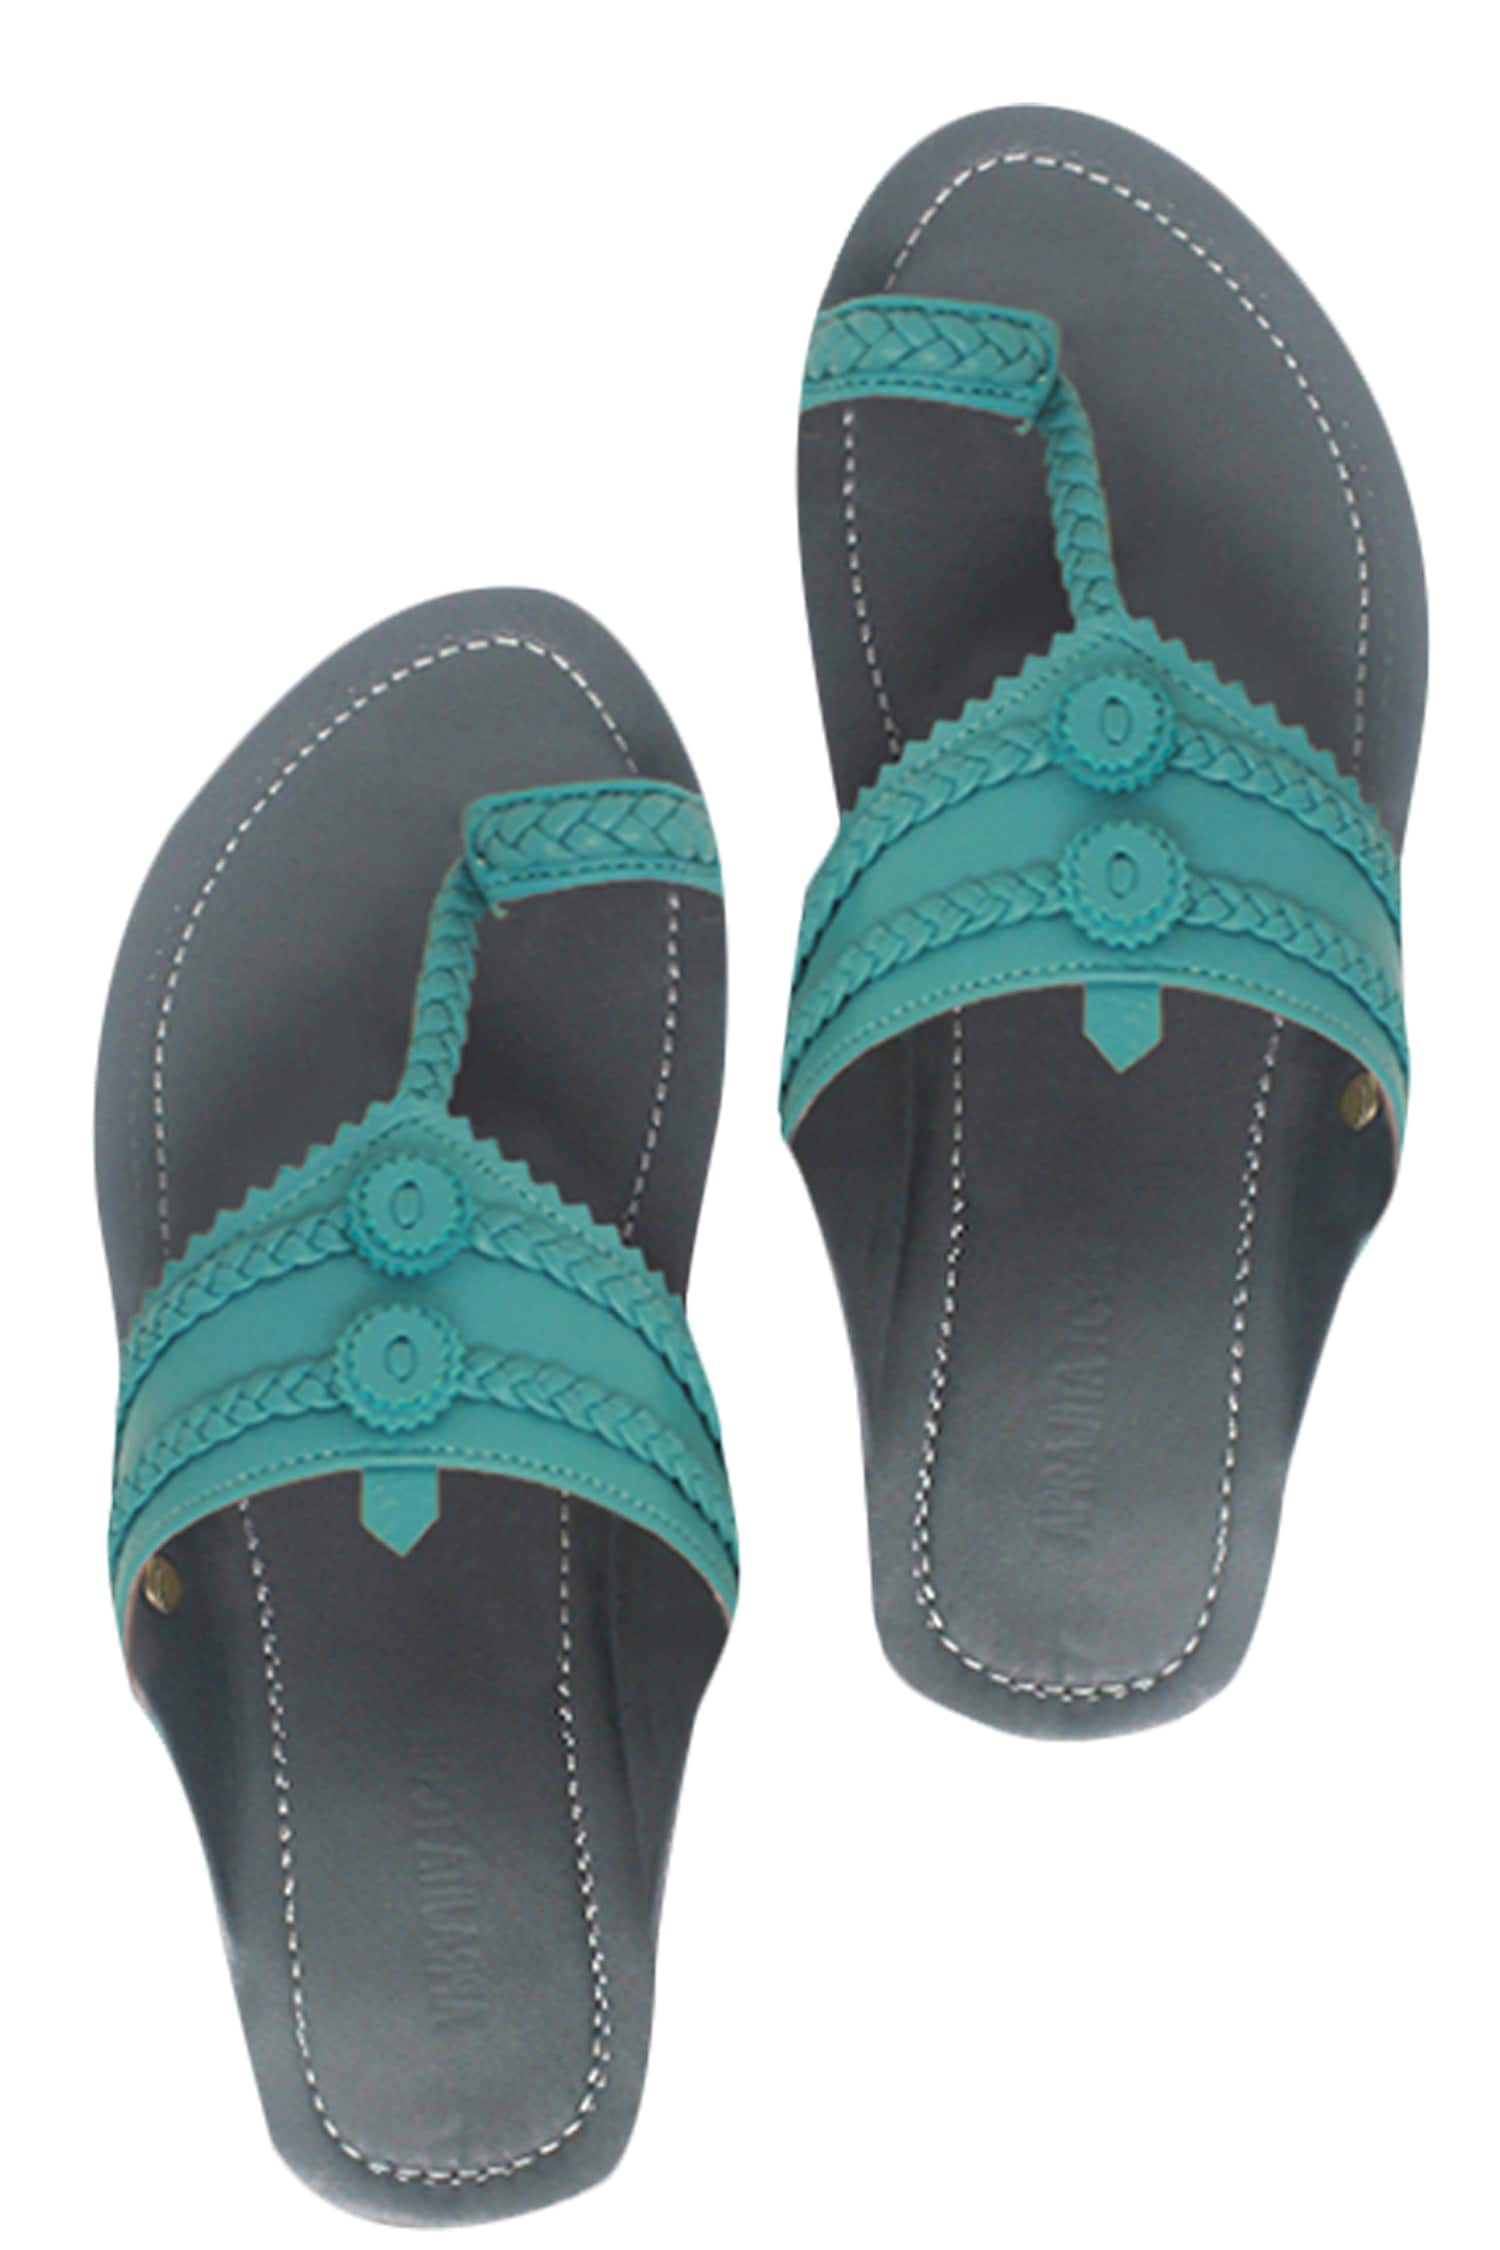 Buy Kolhapuri style leather strap sandals by Aprajita Toor at Aza Fashions